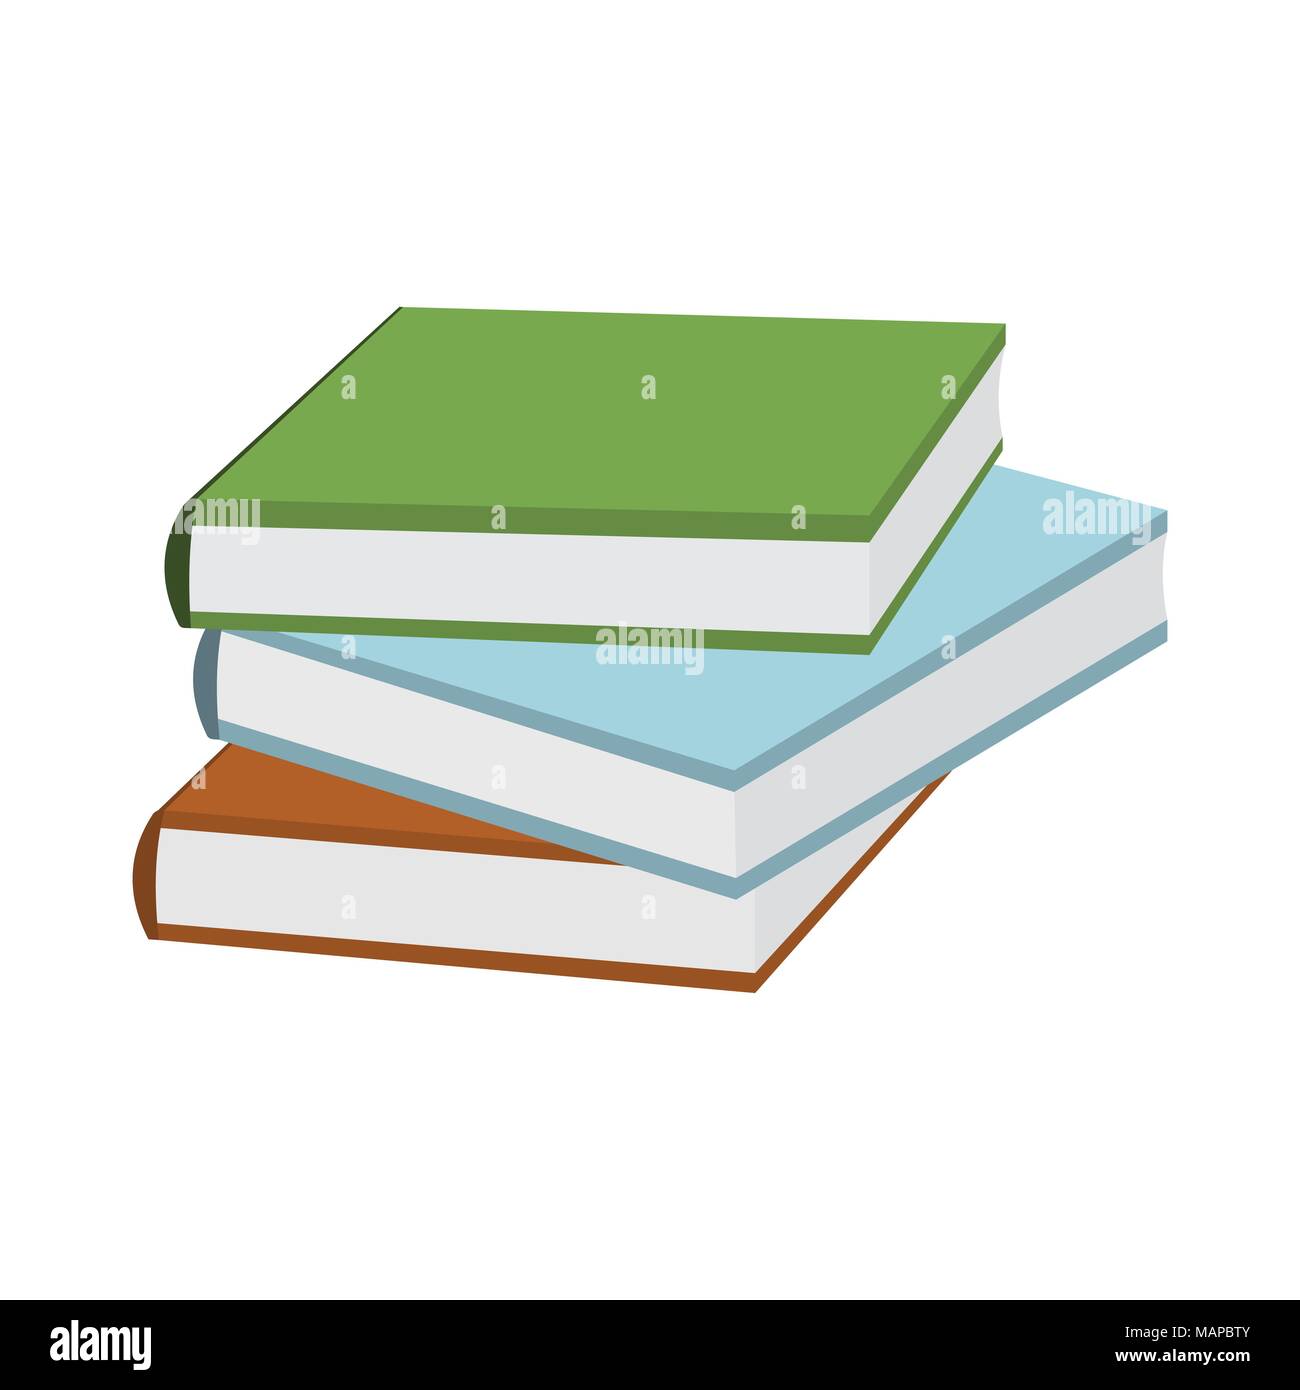 https://c8.alamy.com/comp/MAPBTY/cartoon-books-icon-schools-supplies-isolated-vector-illustration-MAPBTY.jpg